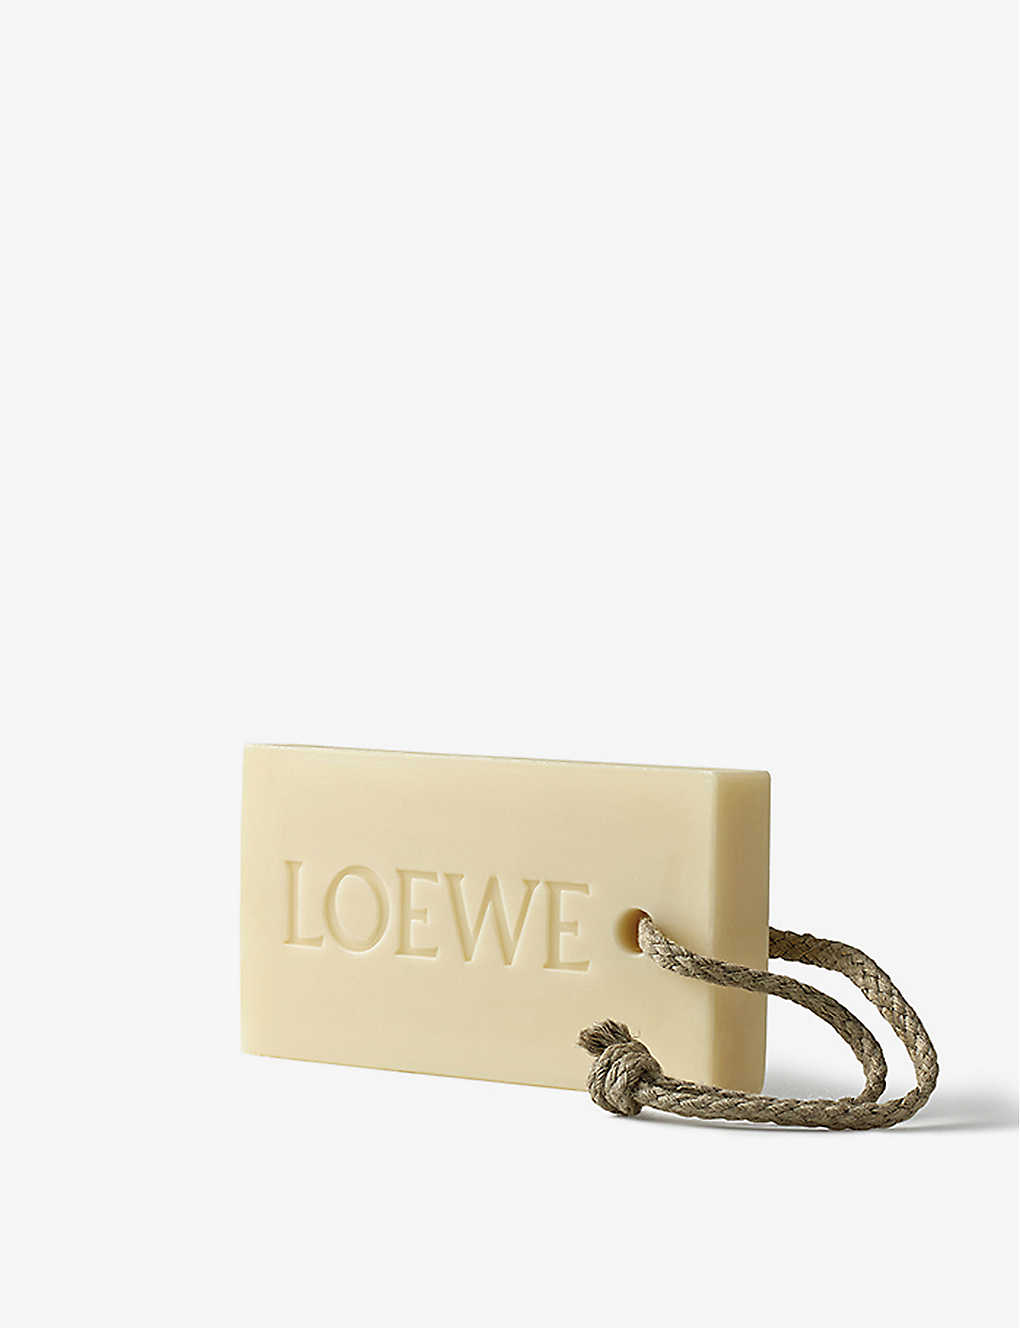 Loewe Oregano Scented Solid Soap 290g In Multi